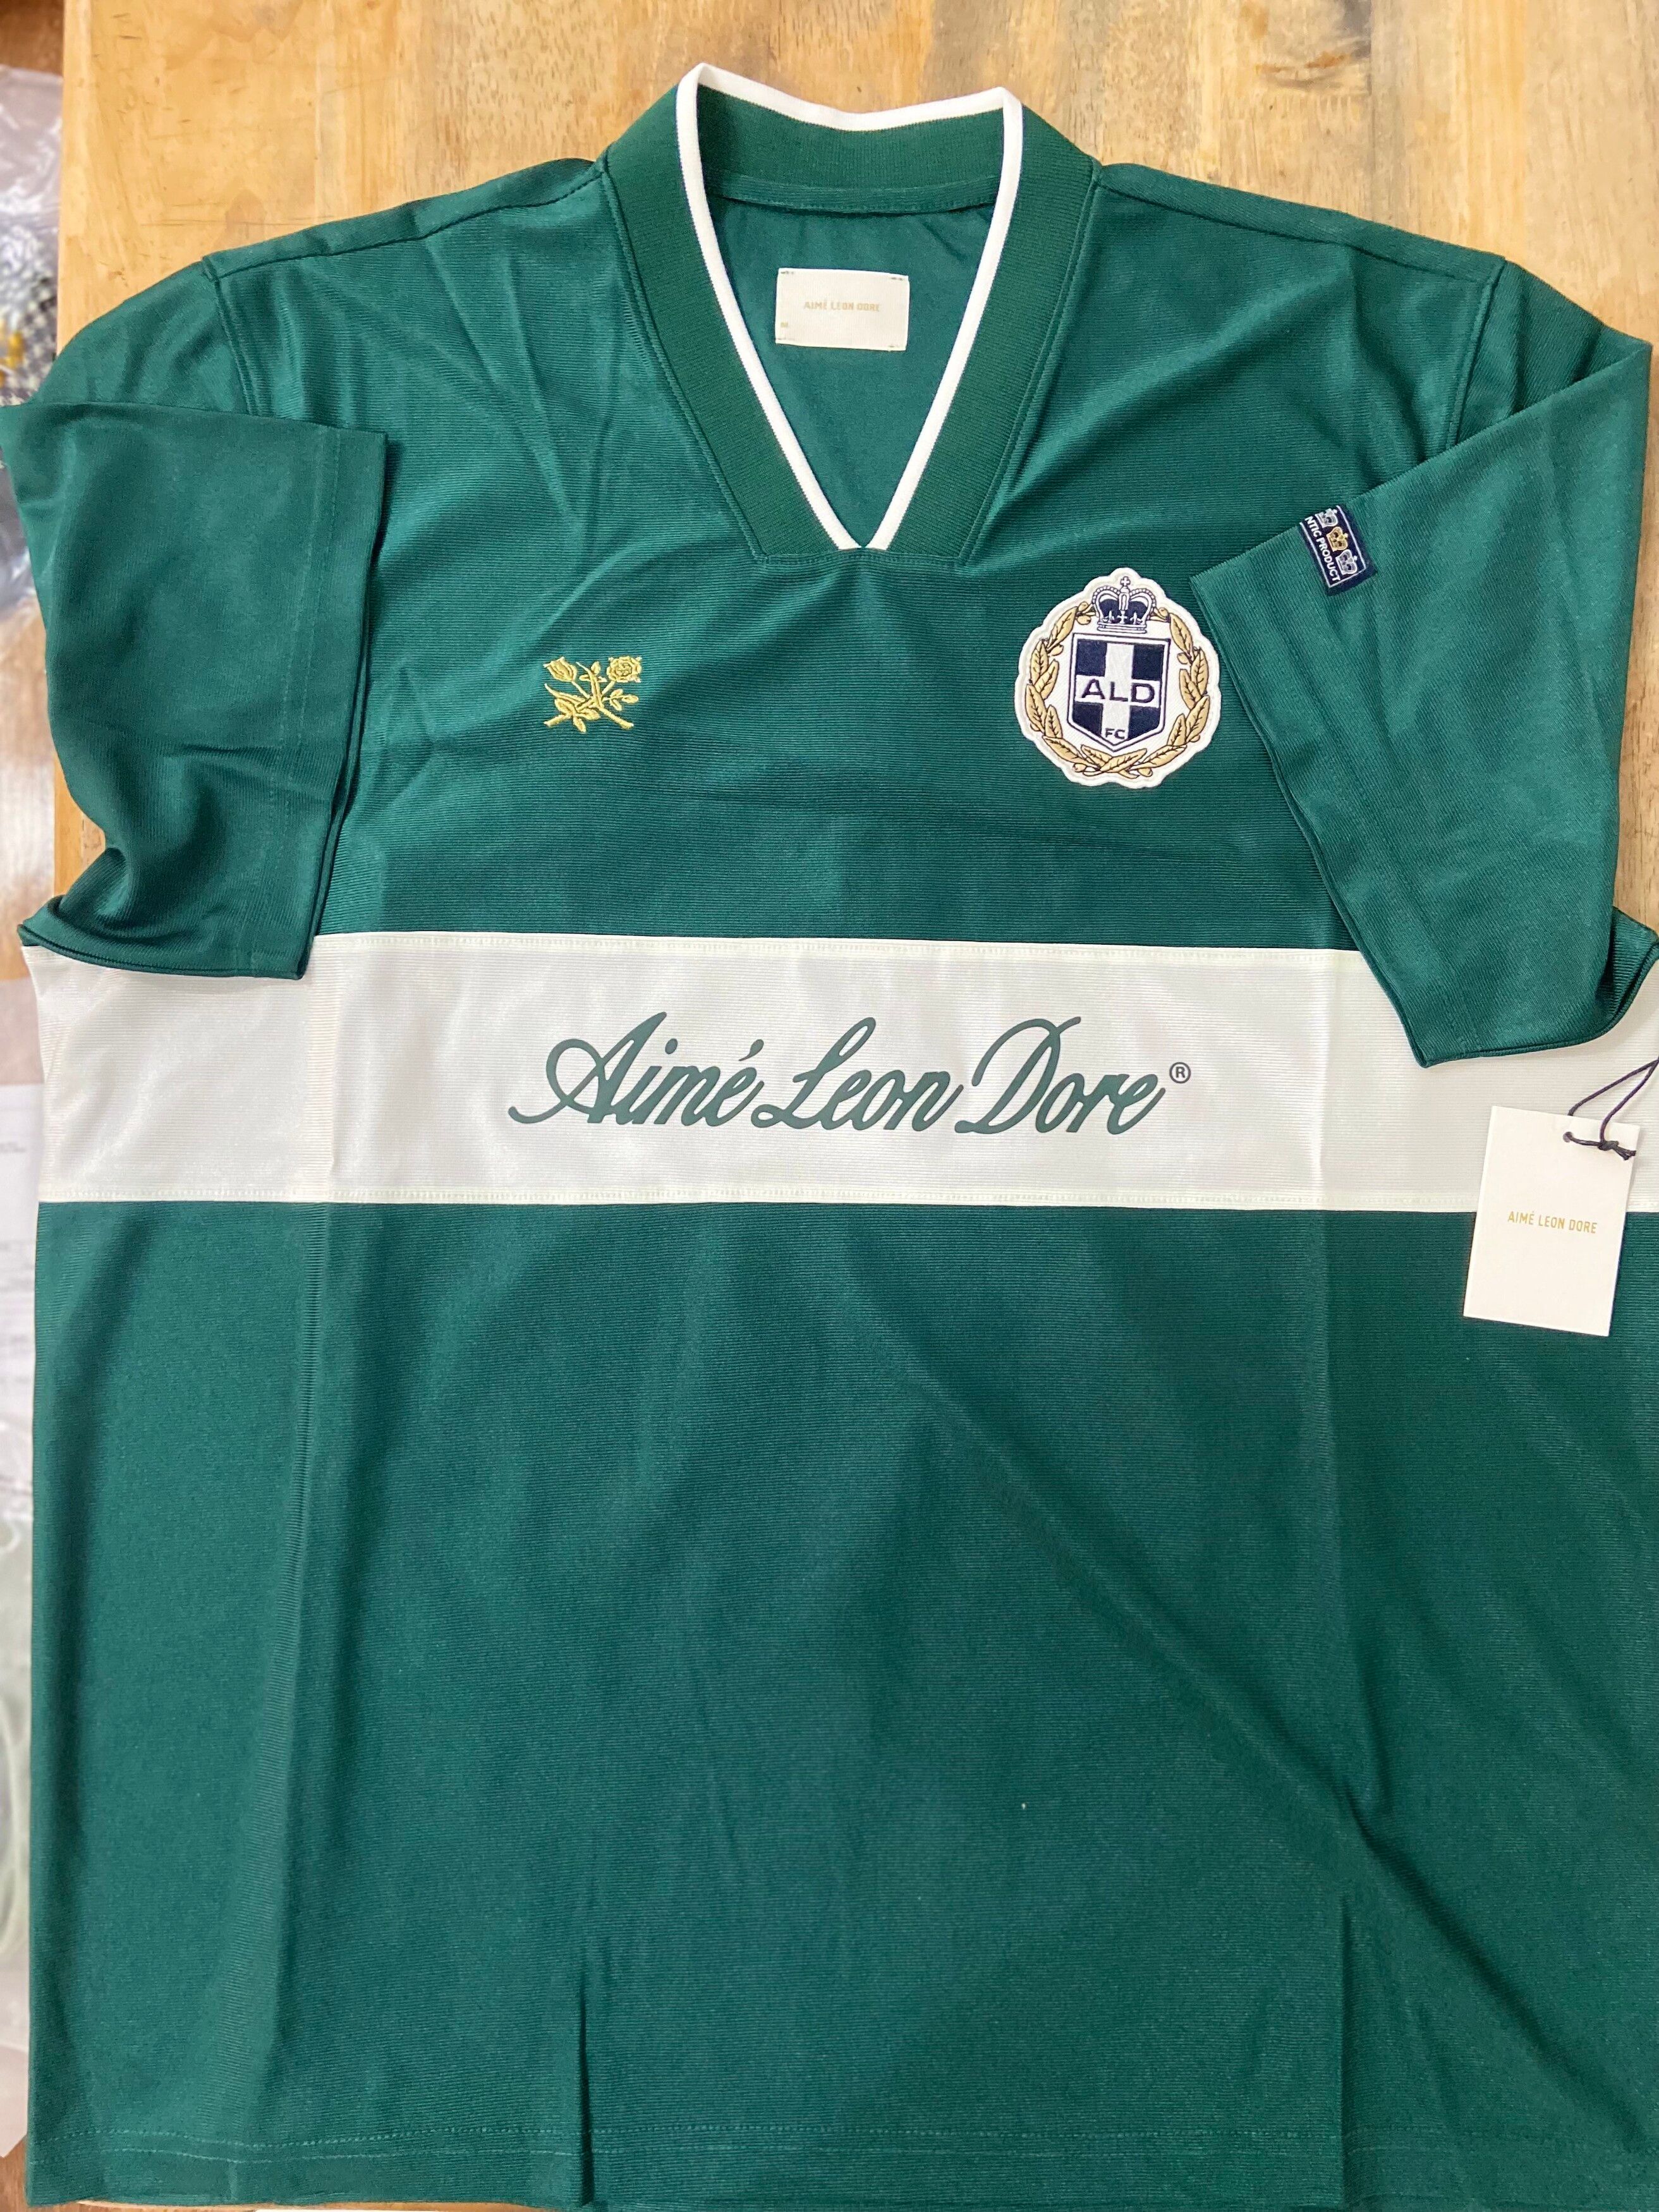 Aime Leon Dore ALD Team Soccer Jersey | Grailed